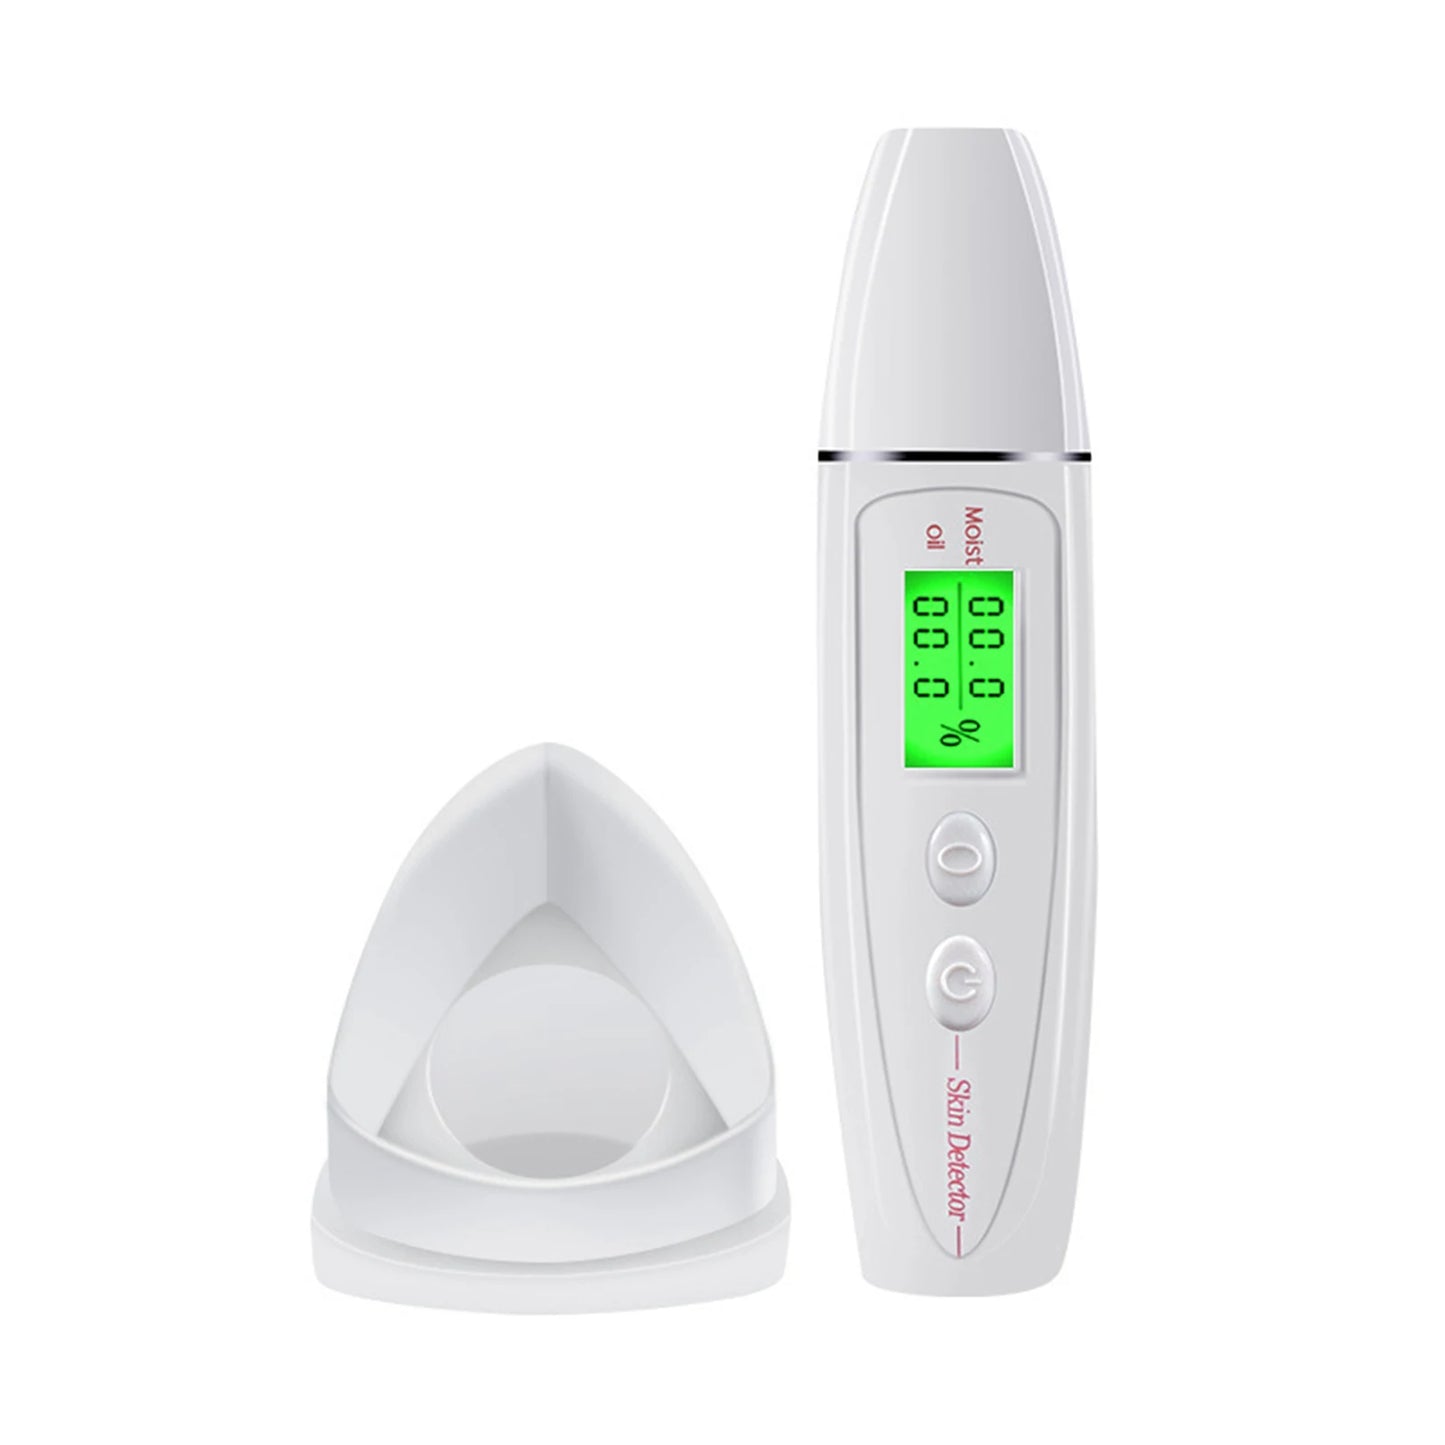 Face Skin Tester Portable Skin Analyzer Digital Aesthetic Moisture Tester Water Oil Monitor for Skin Care Skin Diagnostic Device